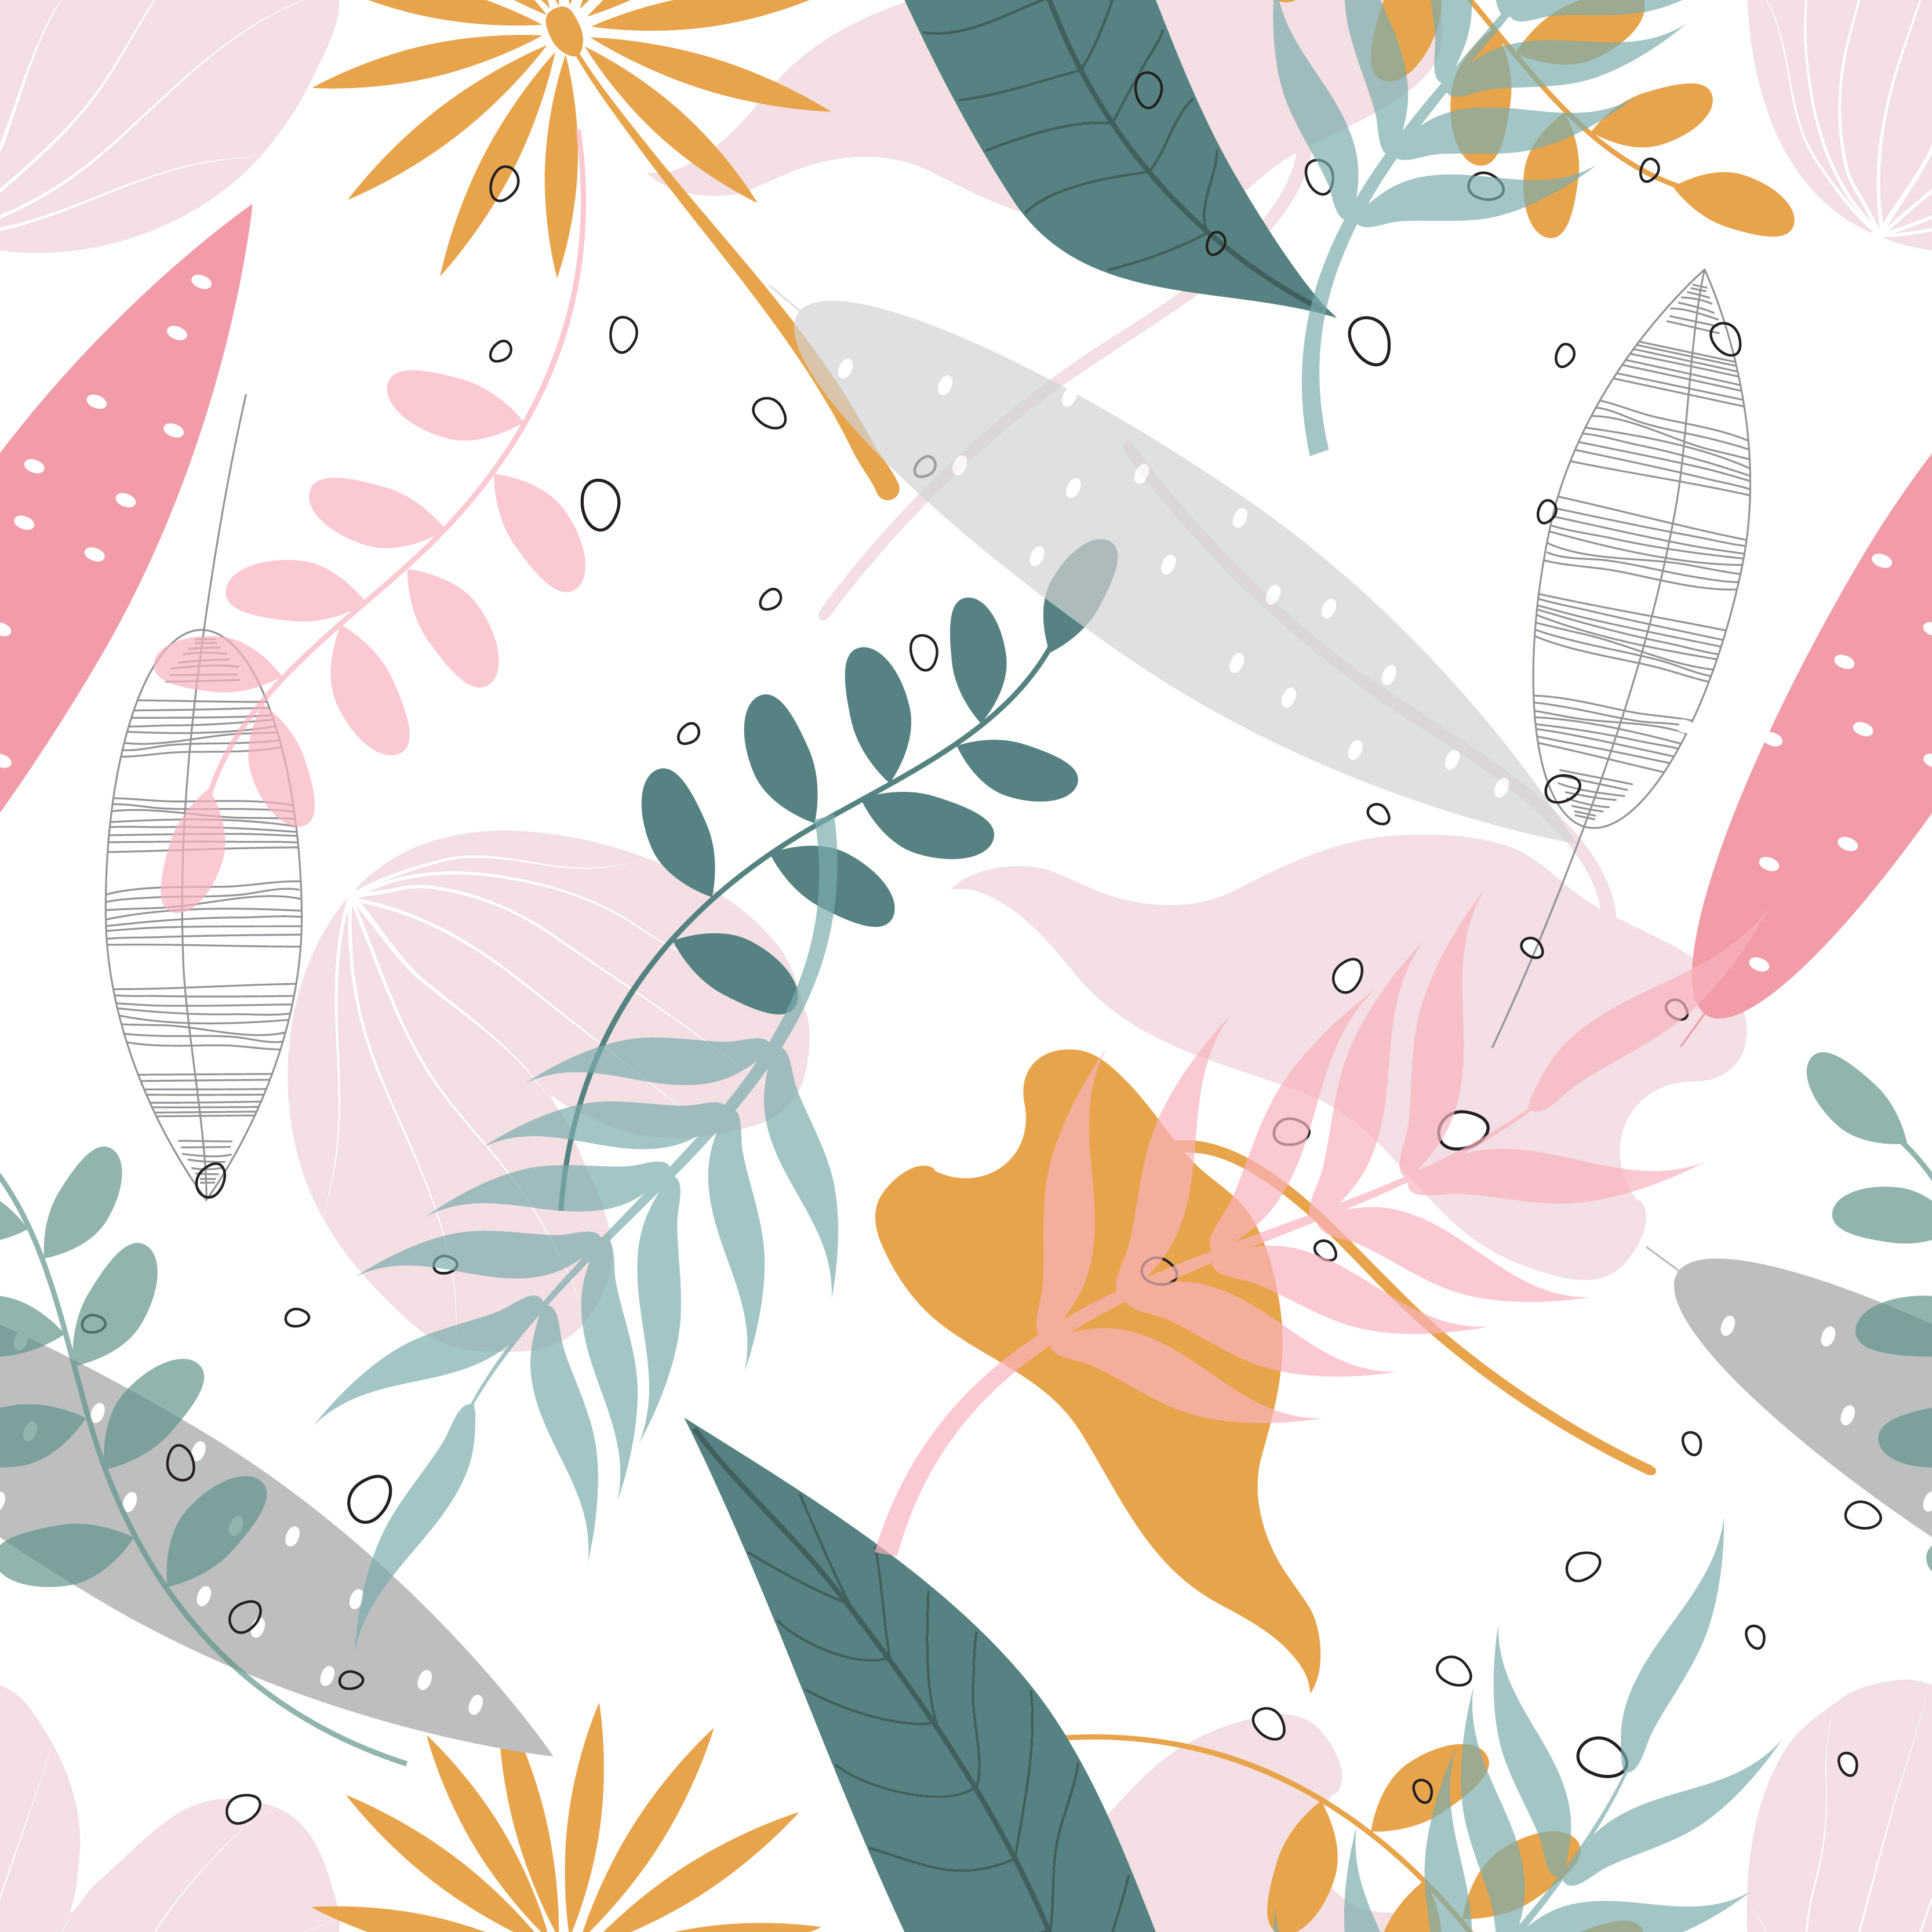 Details 100 pastel background patterns